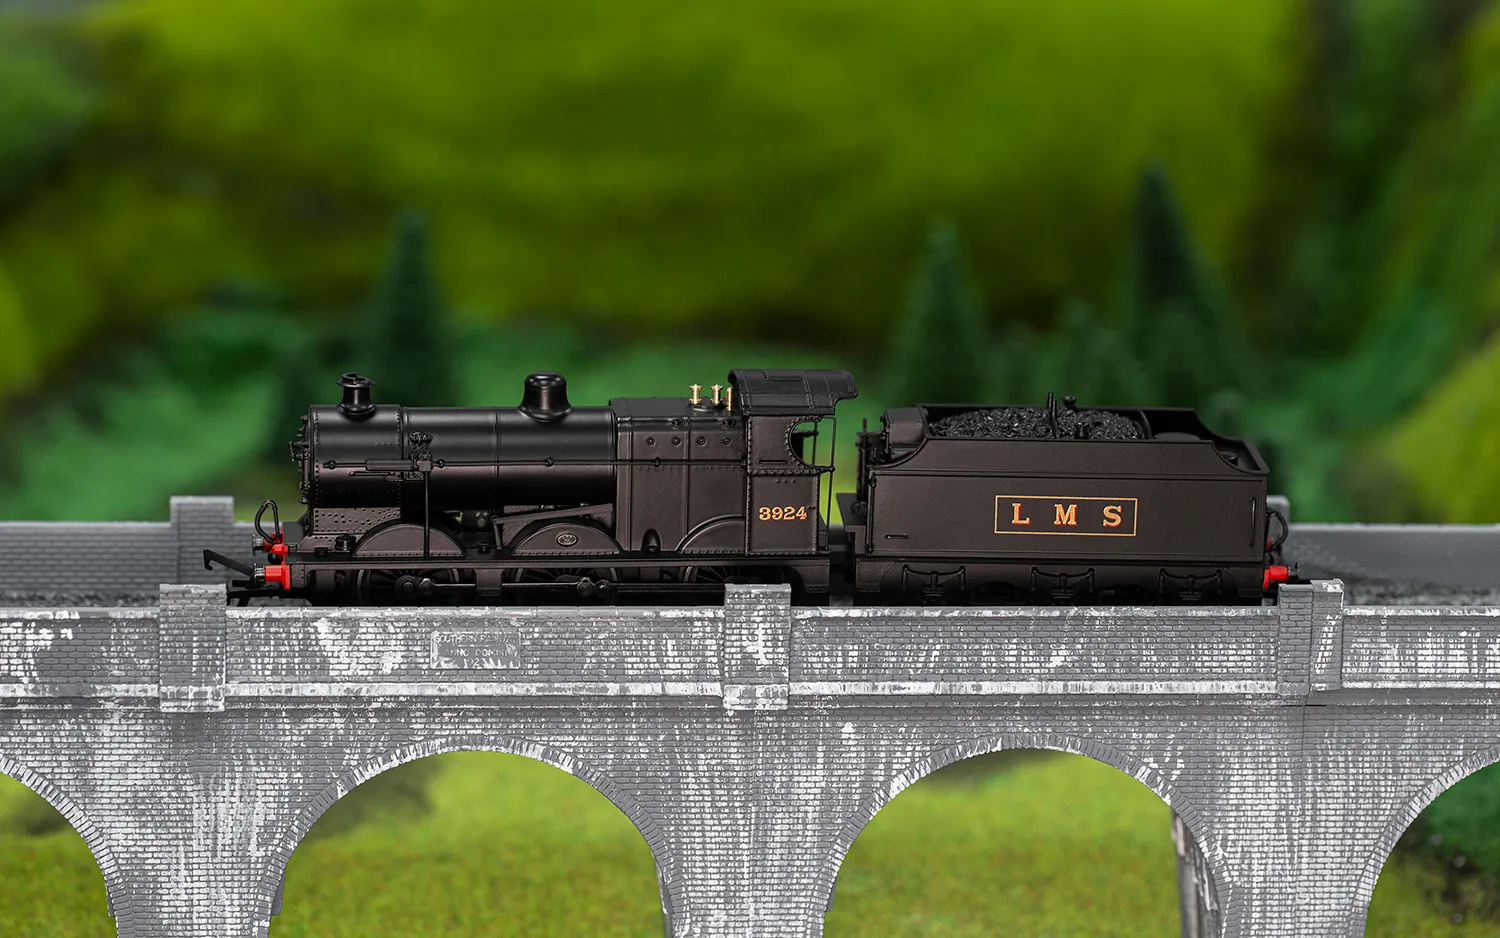 LMS Class 4F No. 43924 - The Railway Children Return - Era 3